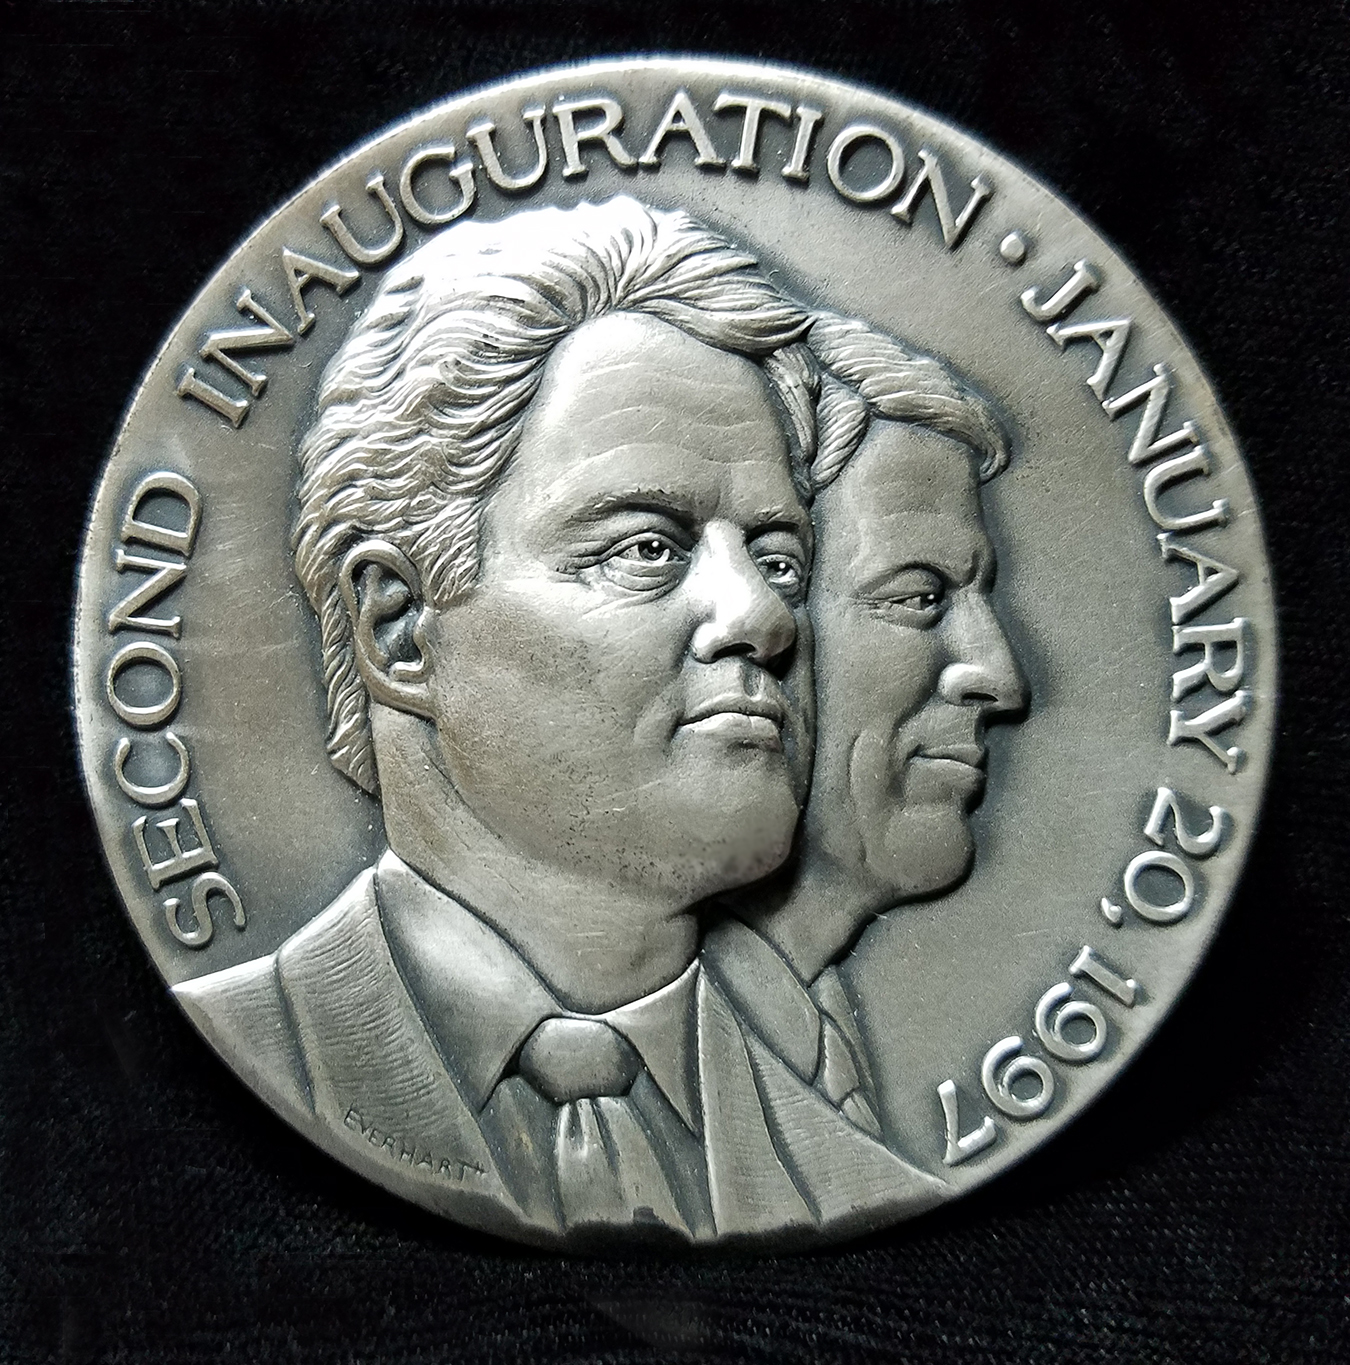 Clinton Inaugural Medal obverse